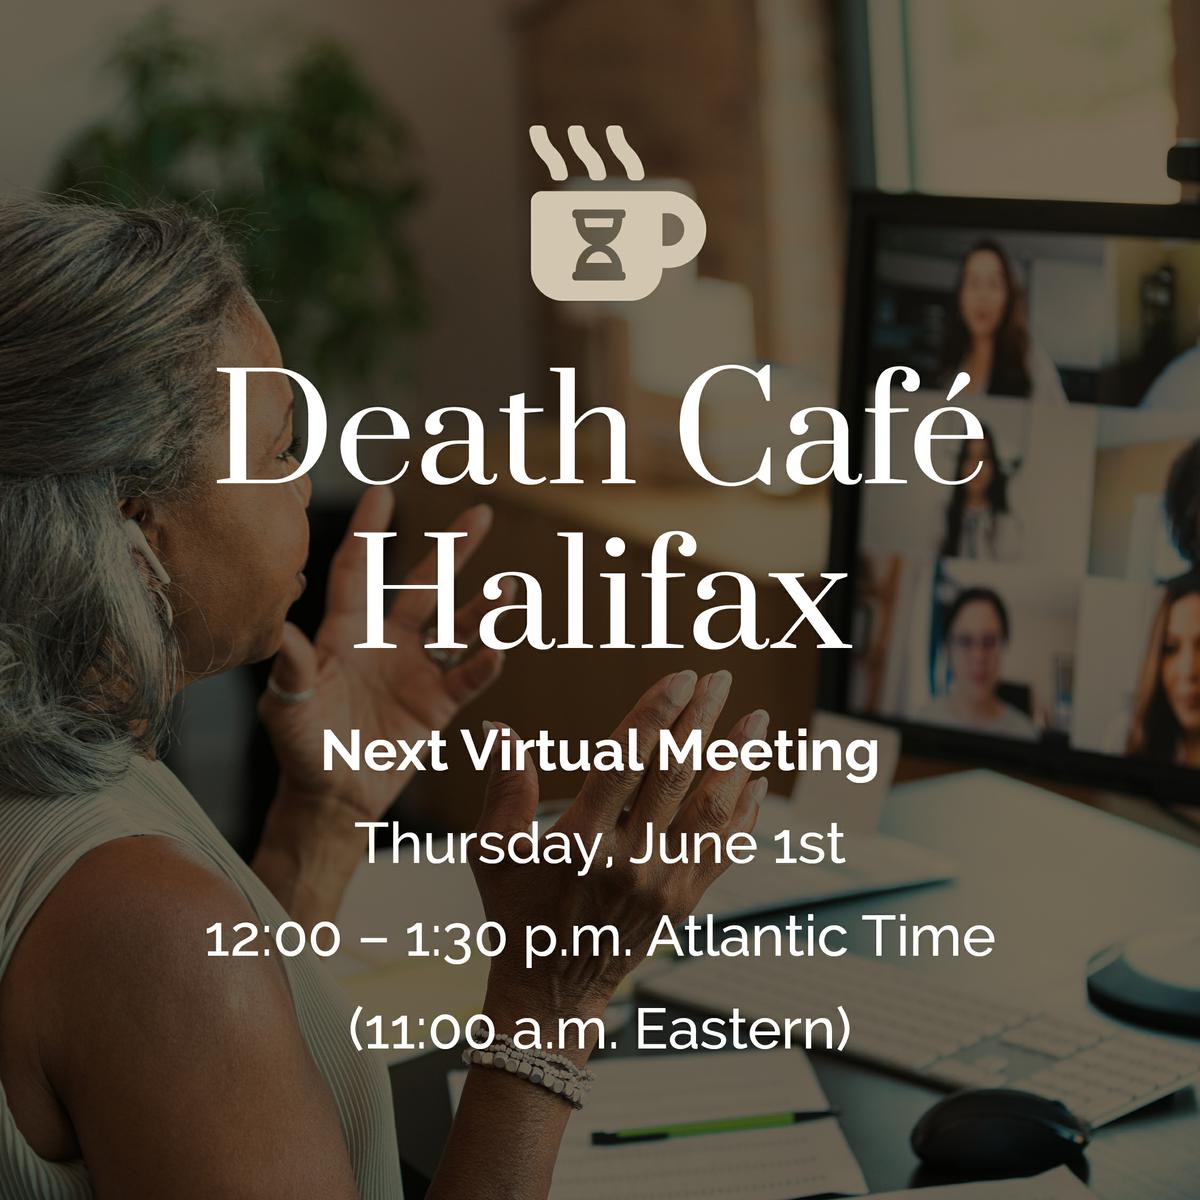 Online Death Cafe Halifax Canada